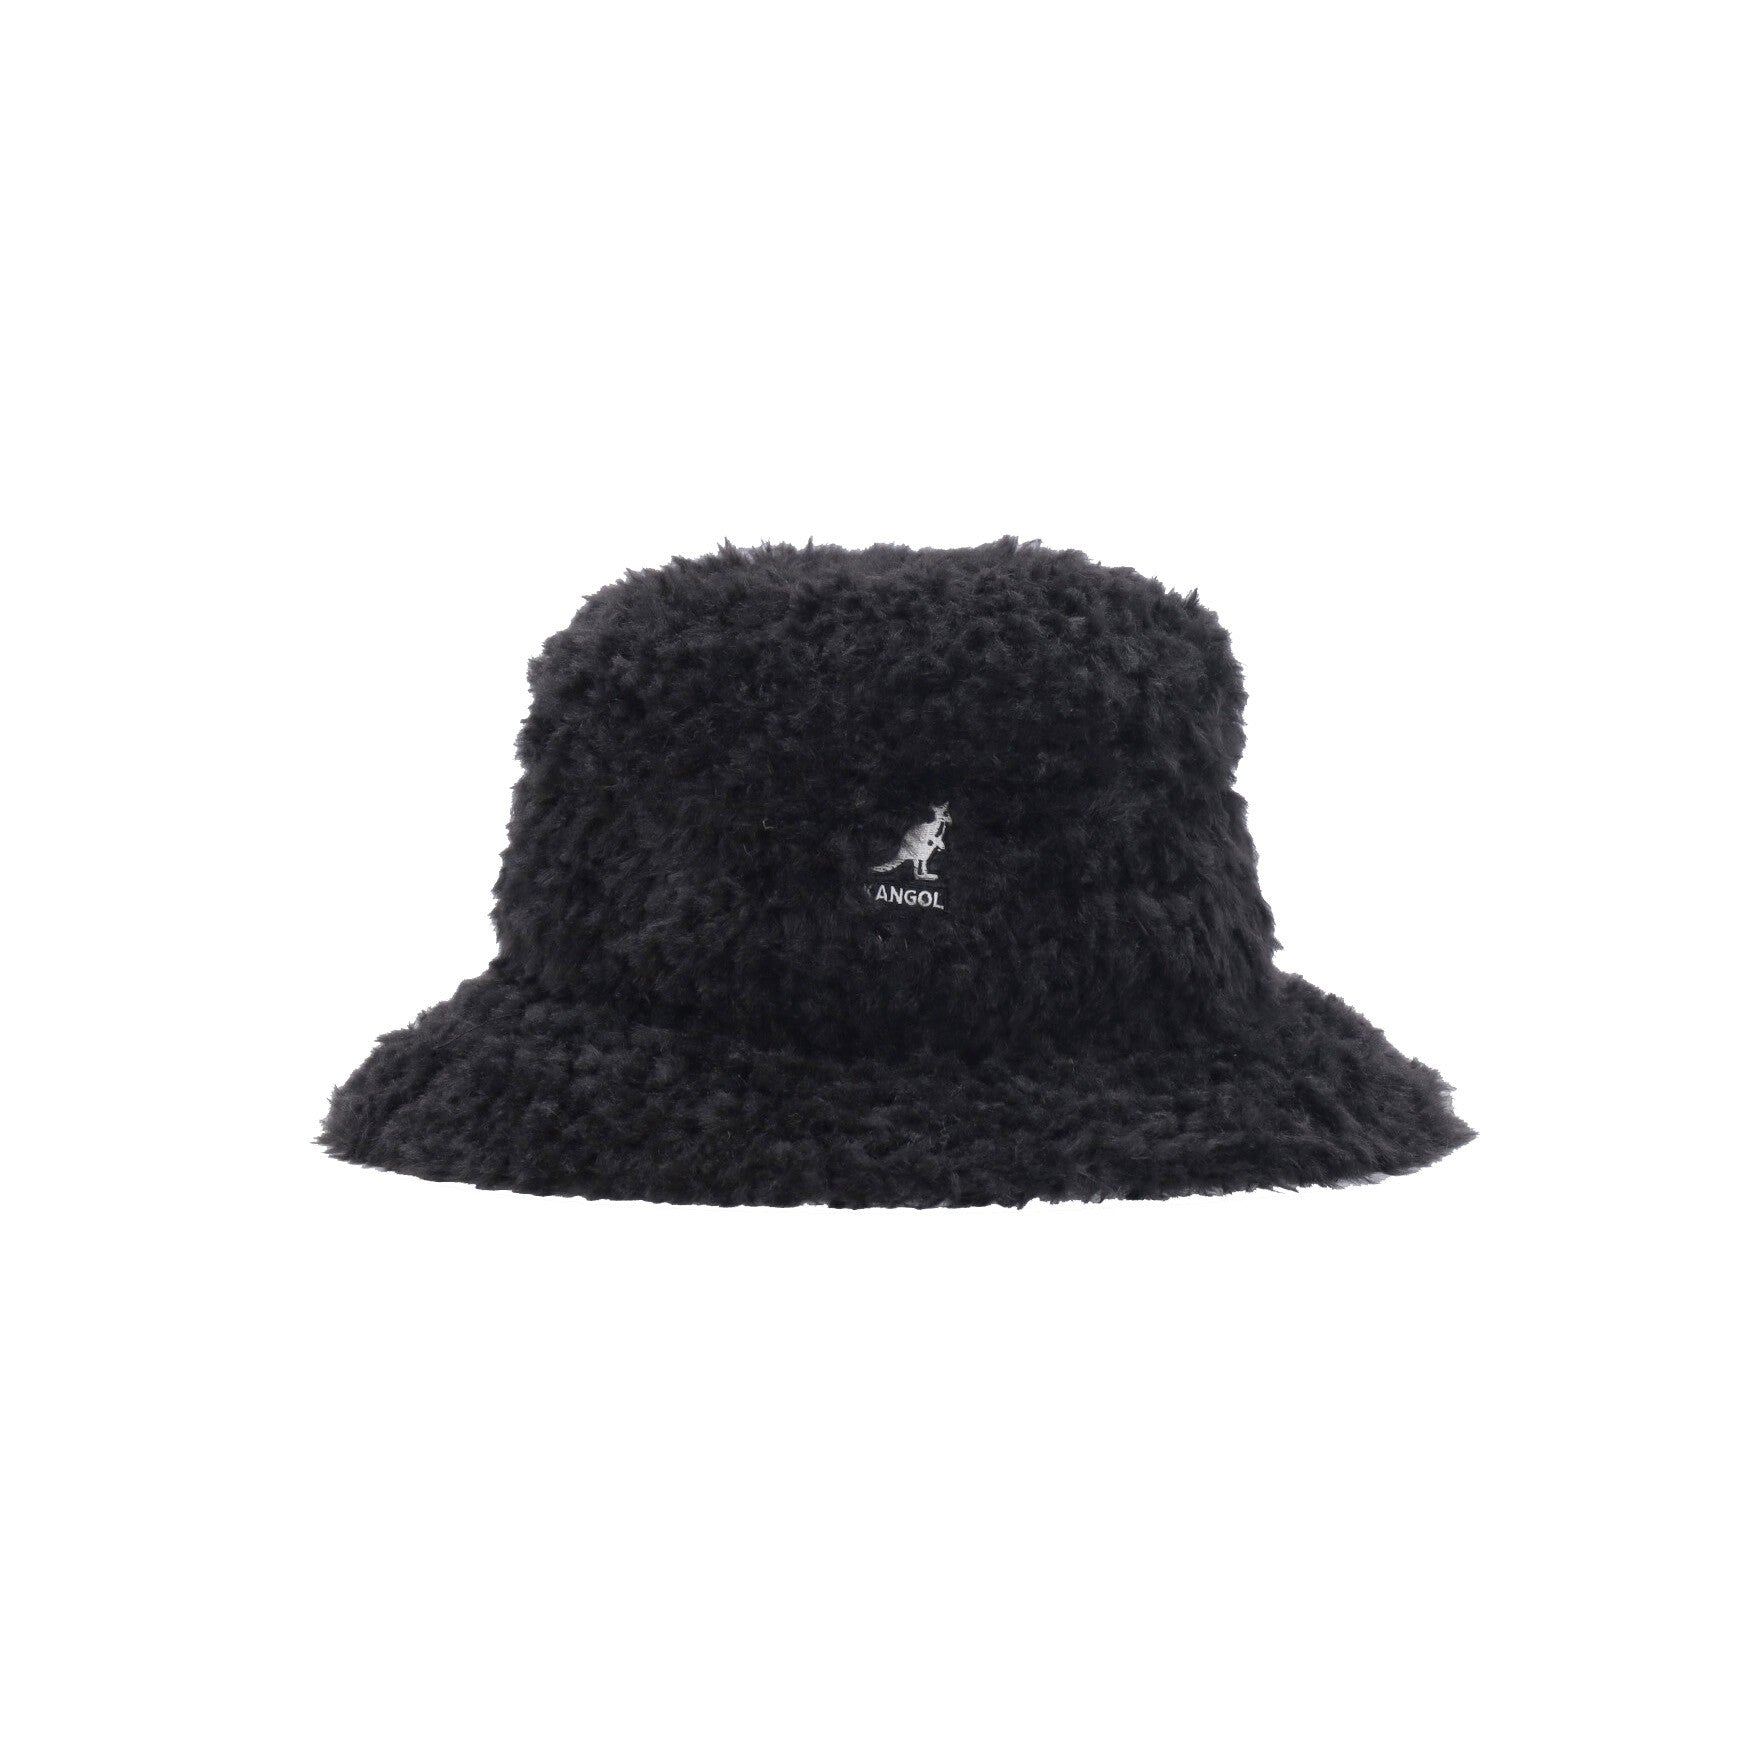 Kangol, Cappello Da Pescatore Uomo Furry Braid Lahinch, Black